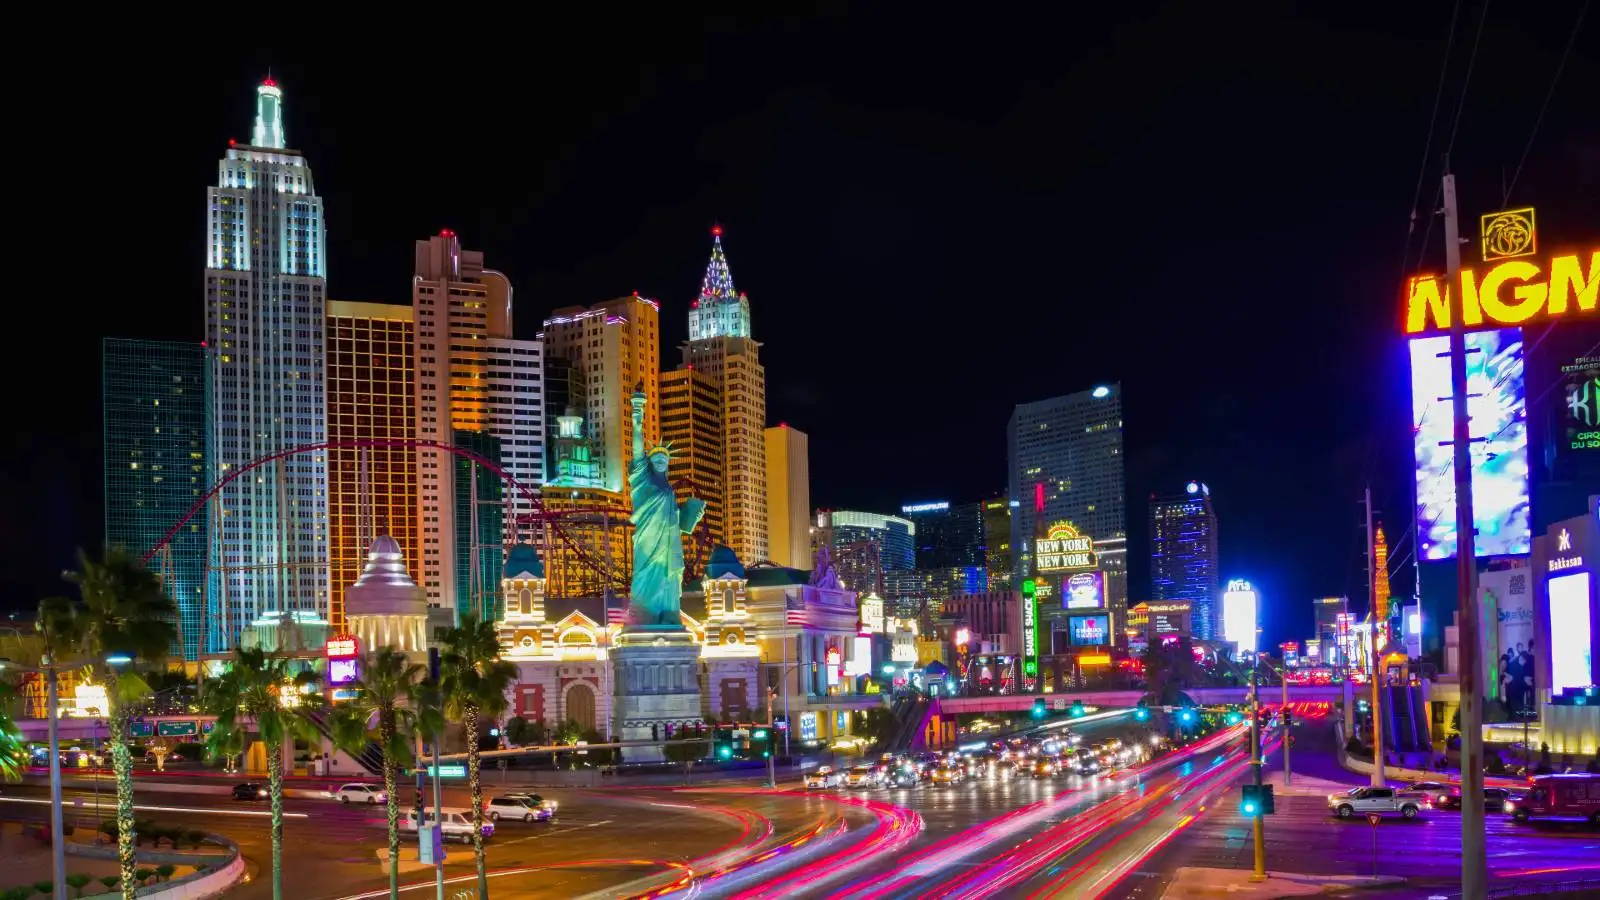 The Strip at night. Las Vegas December 2015.